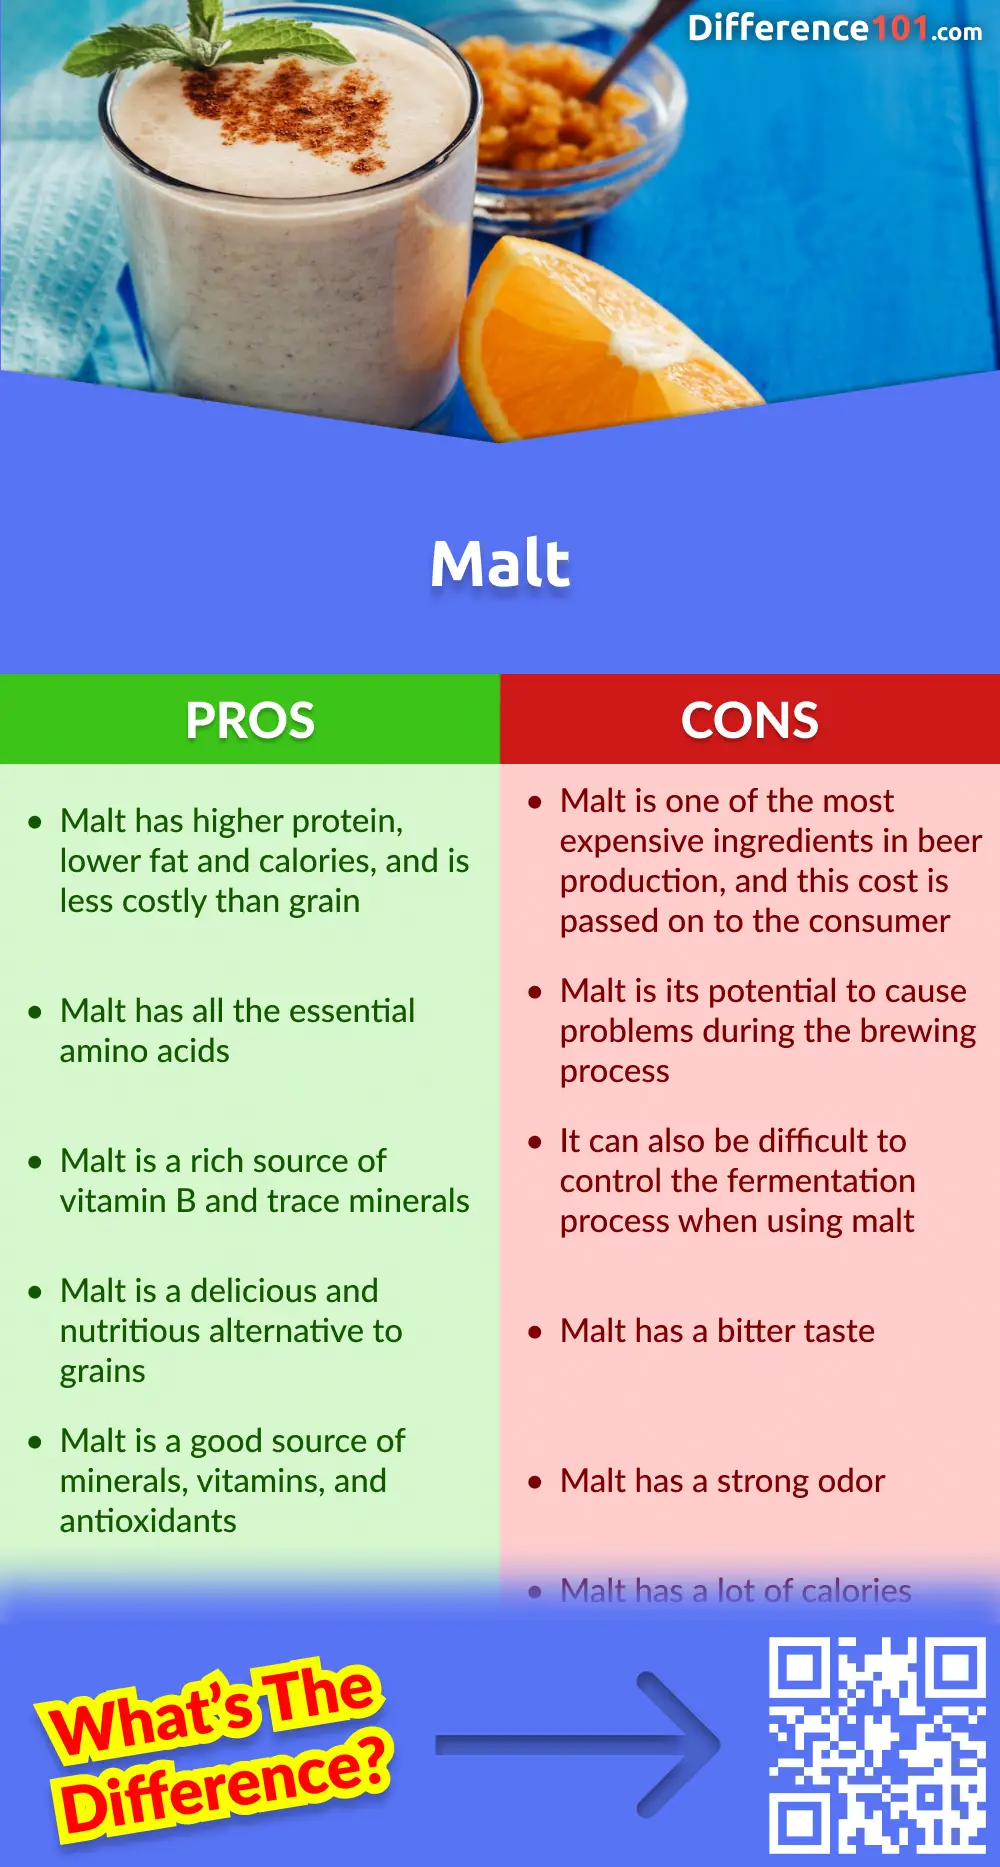 Malt Pros & Cons
